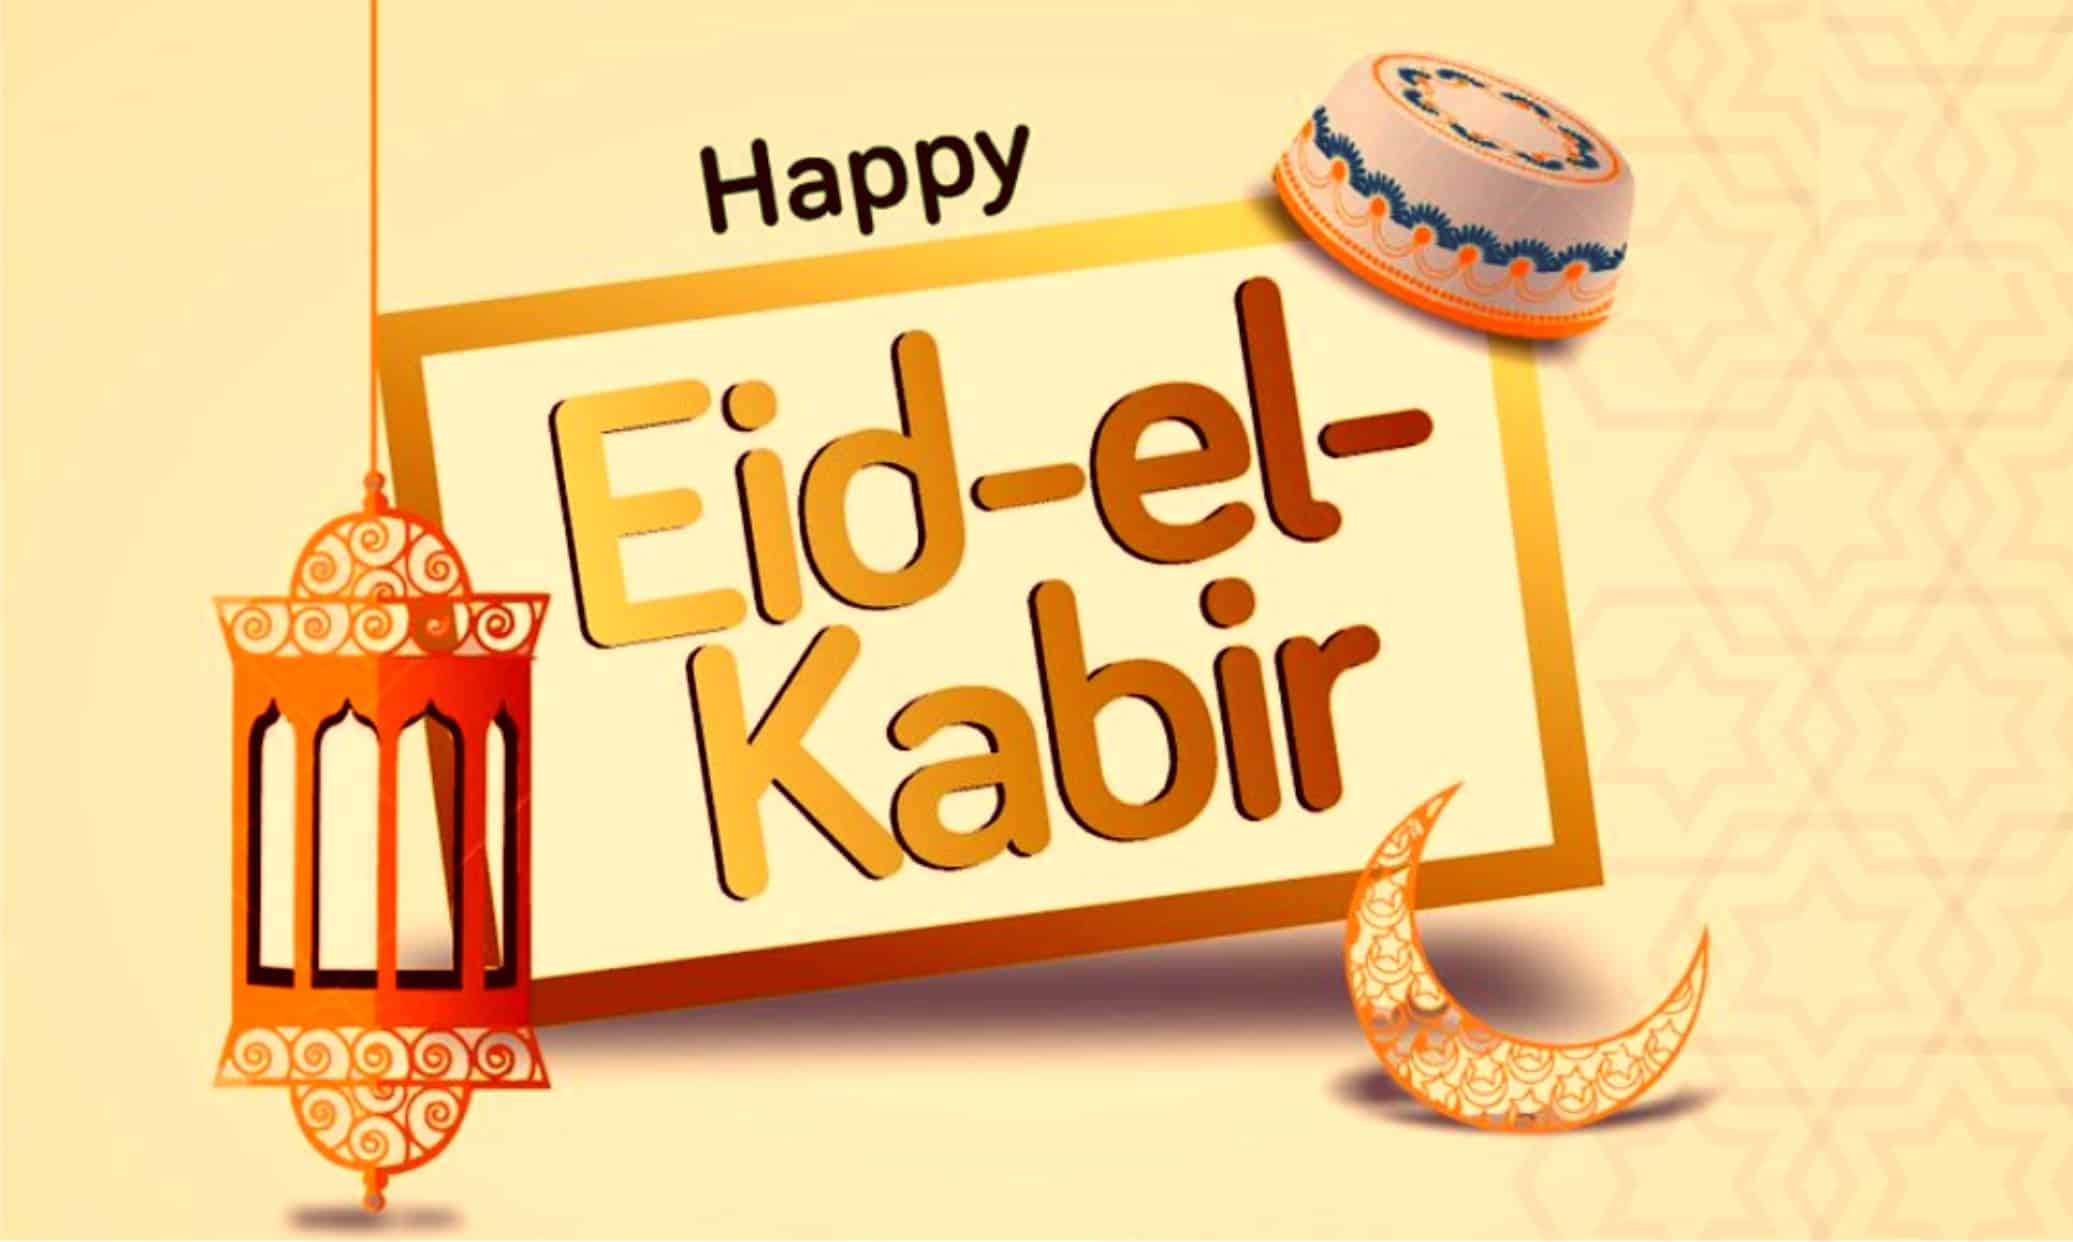 Eid-el-Kabir